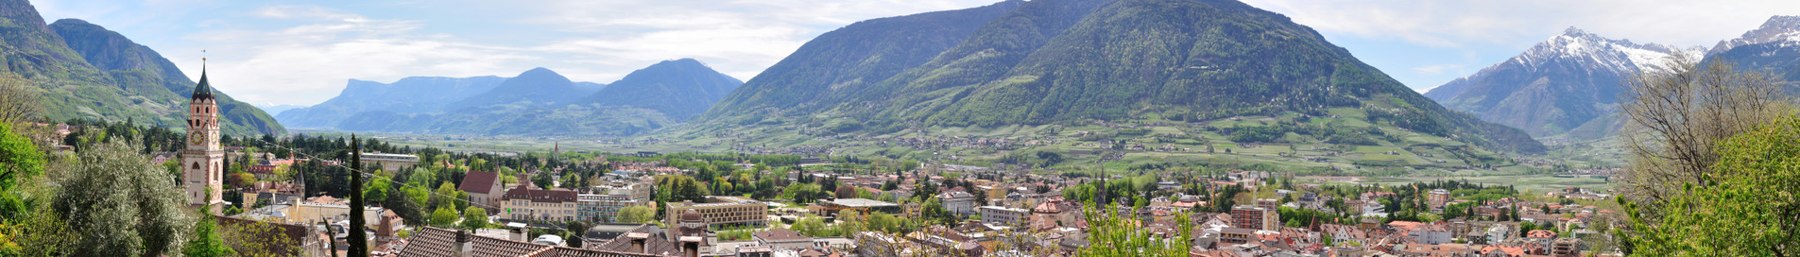 Trentino-Alto Adige banner.jpg